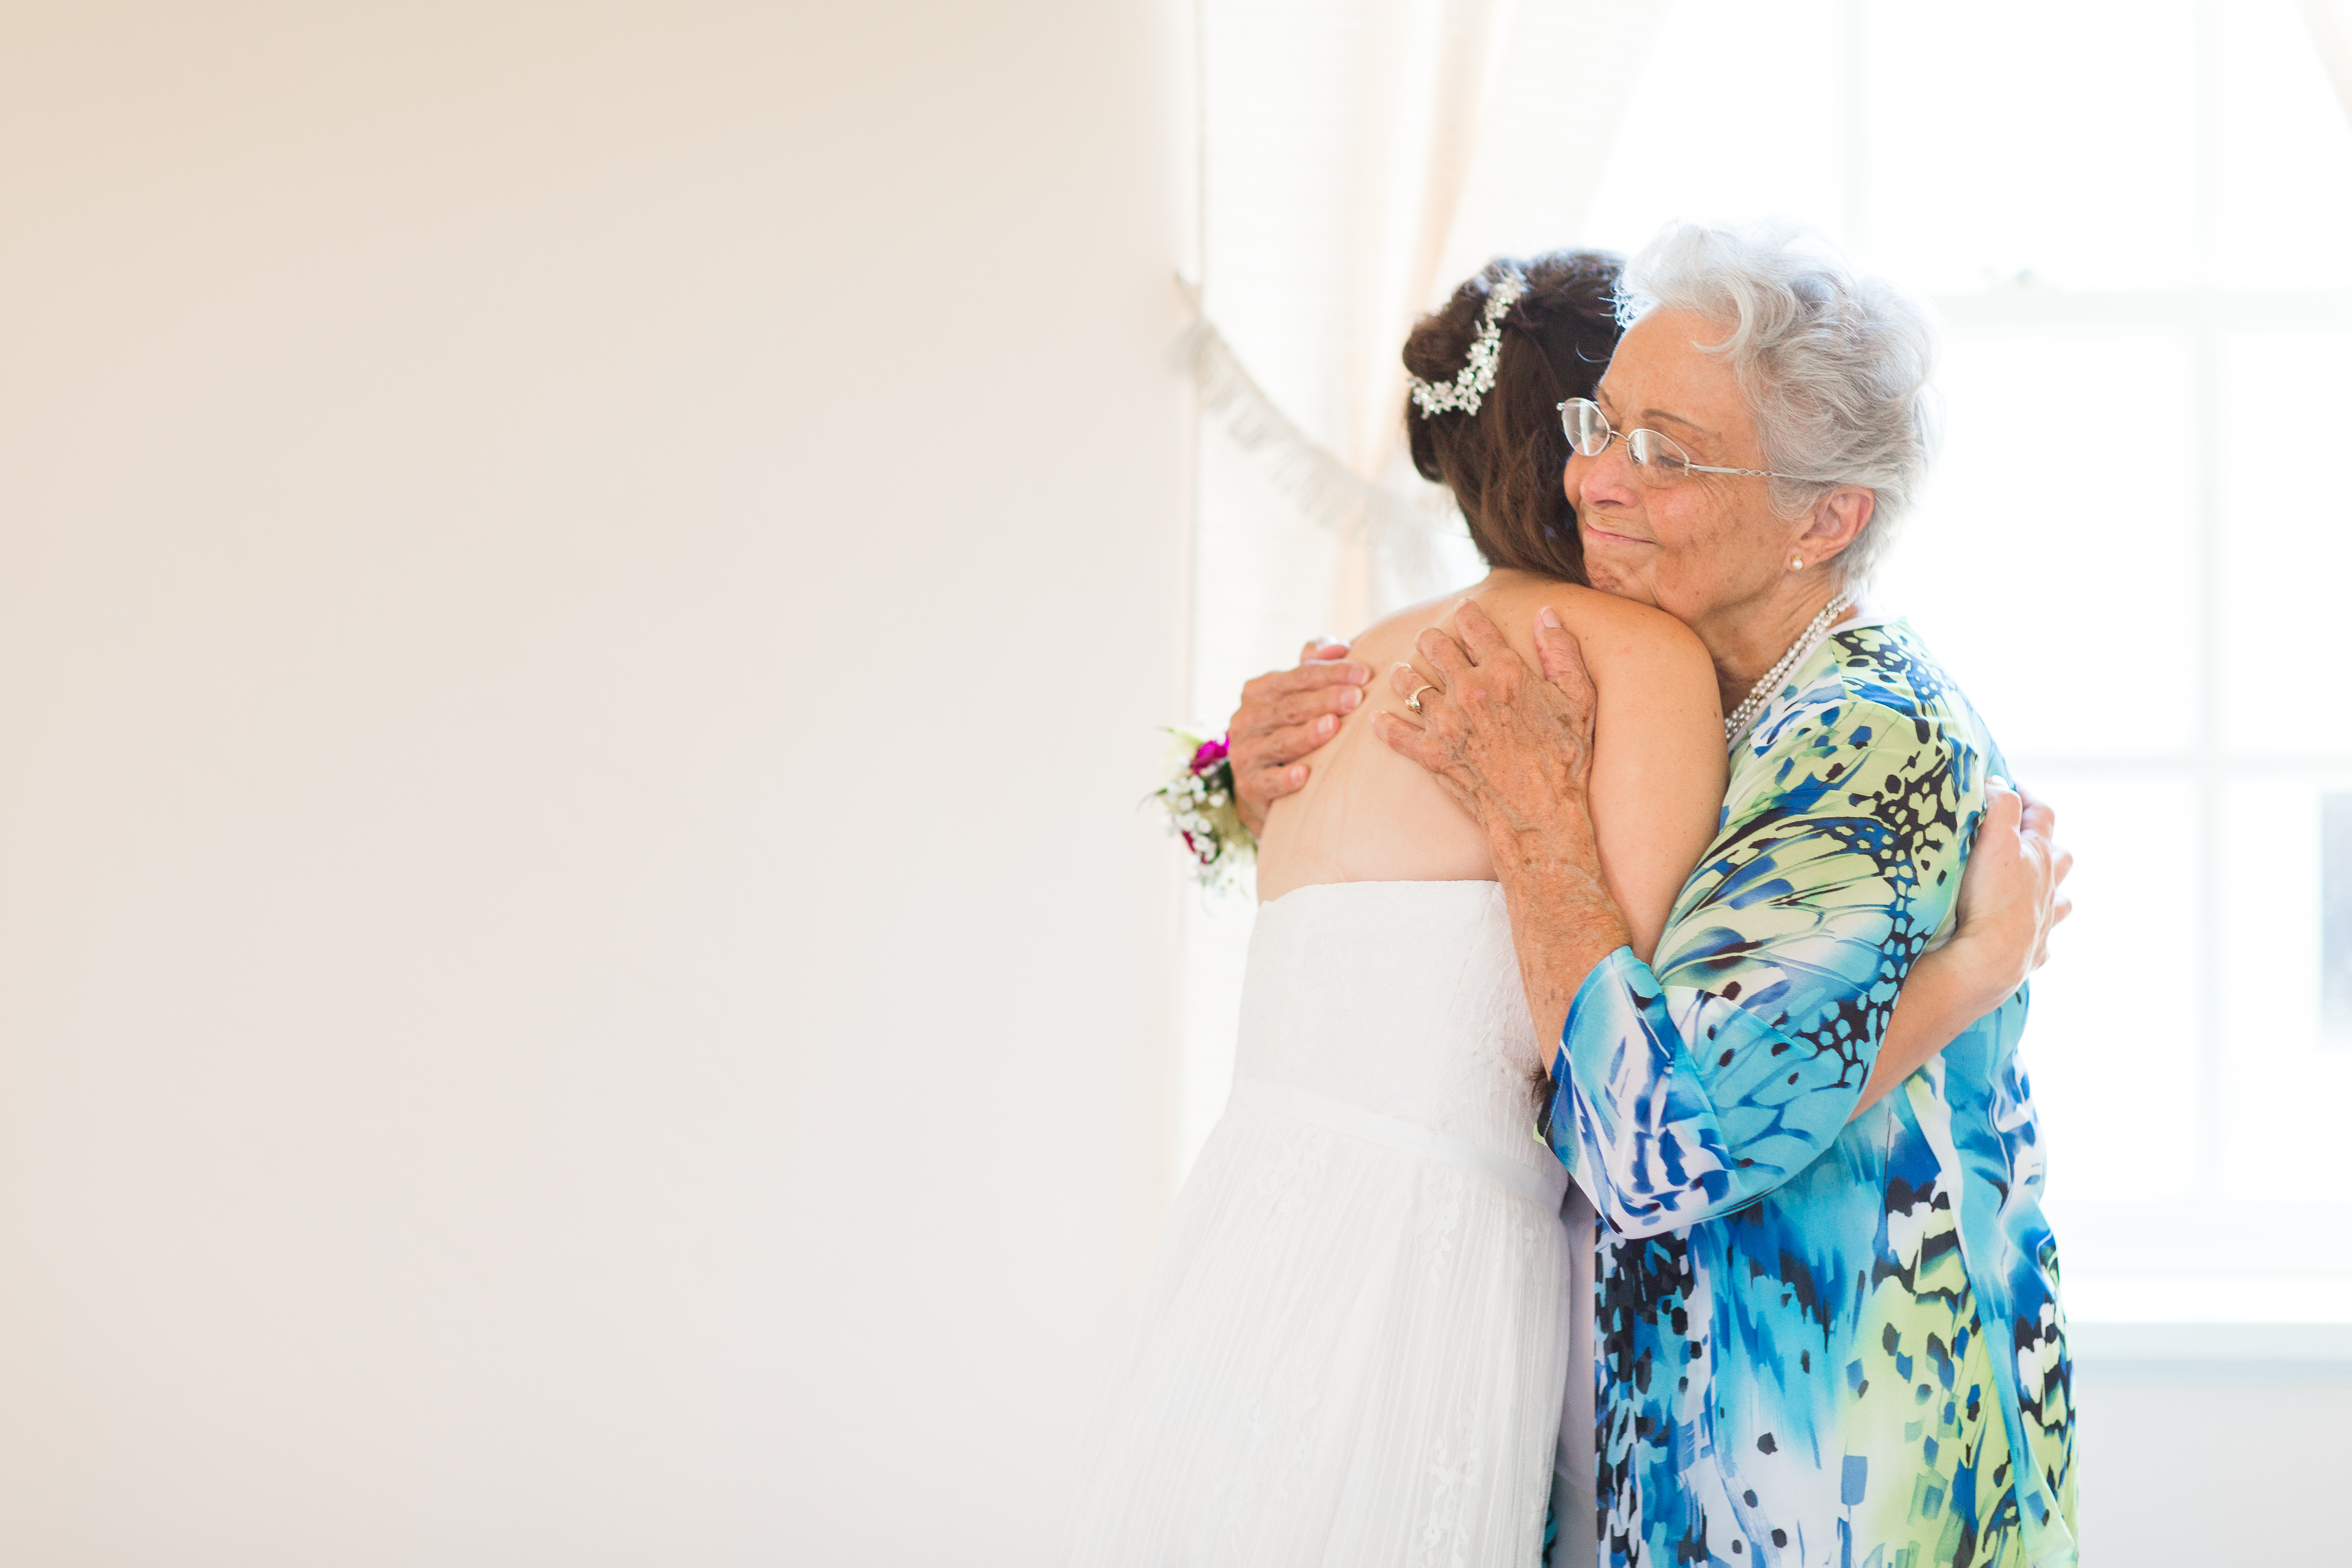 Grandma hugging her granddaughter on her wedding day